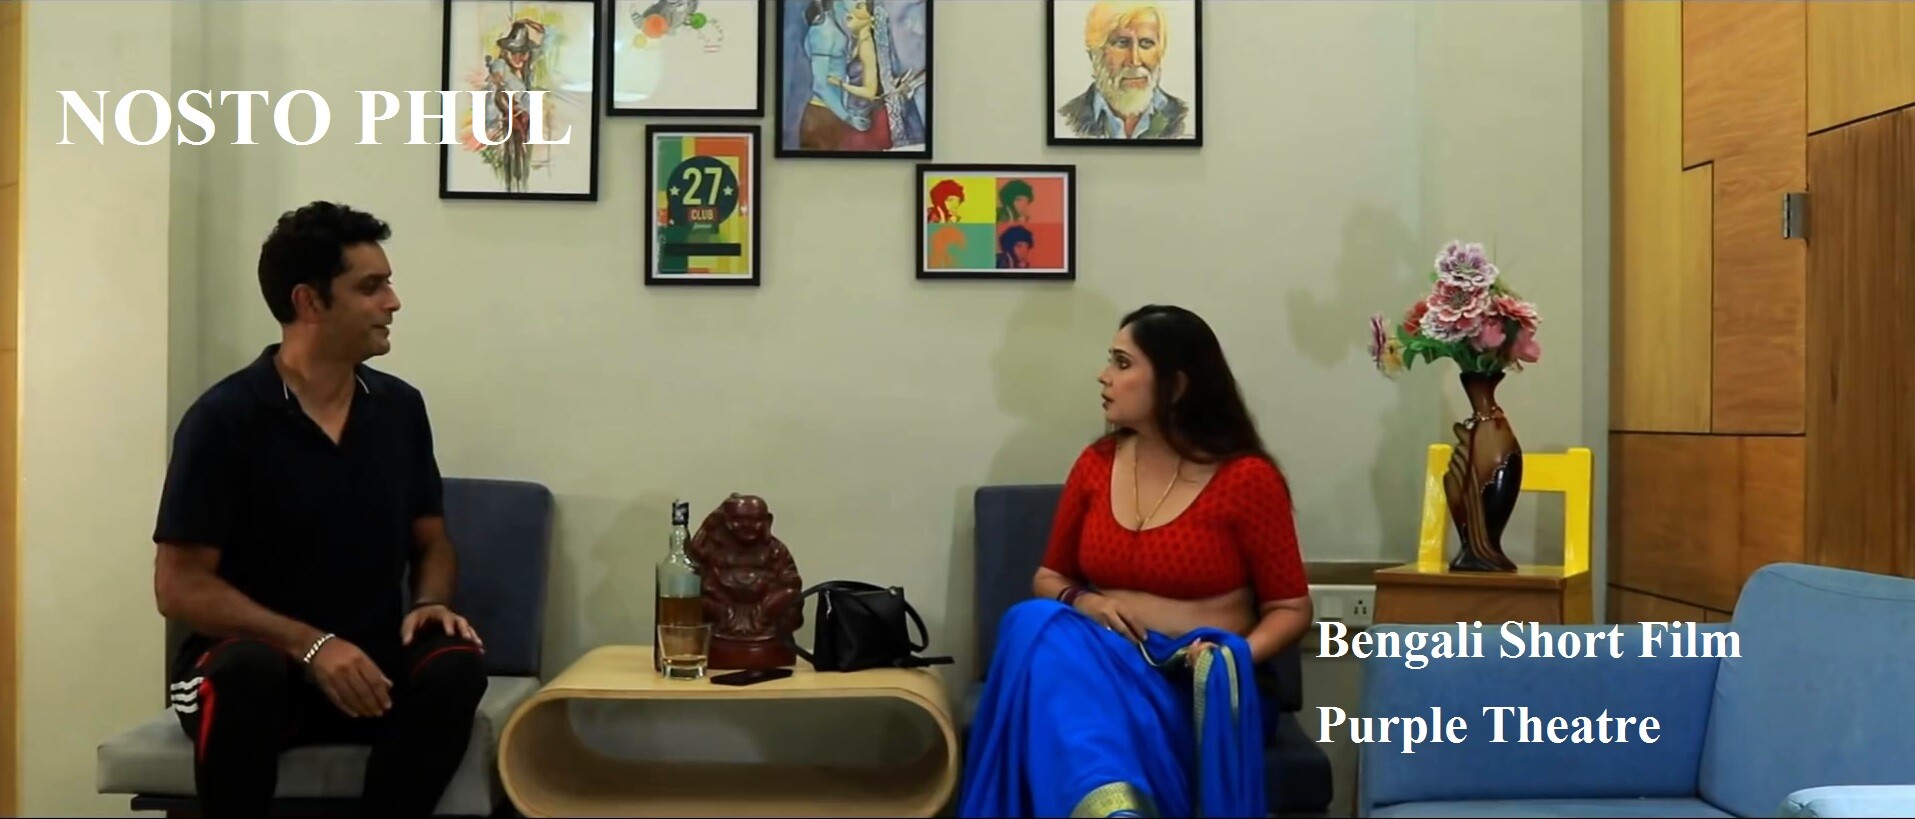 Nosto Phul Purple Theatre Indian Bengali Bold 18+ Short Film